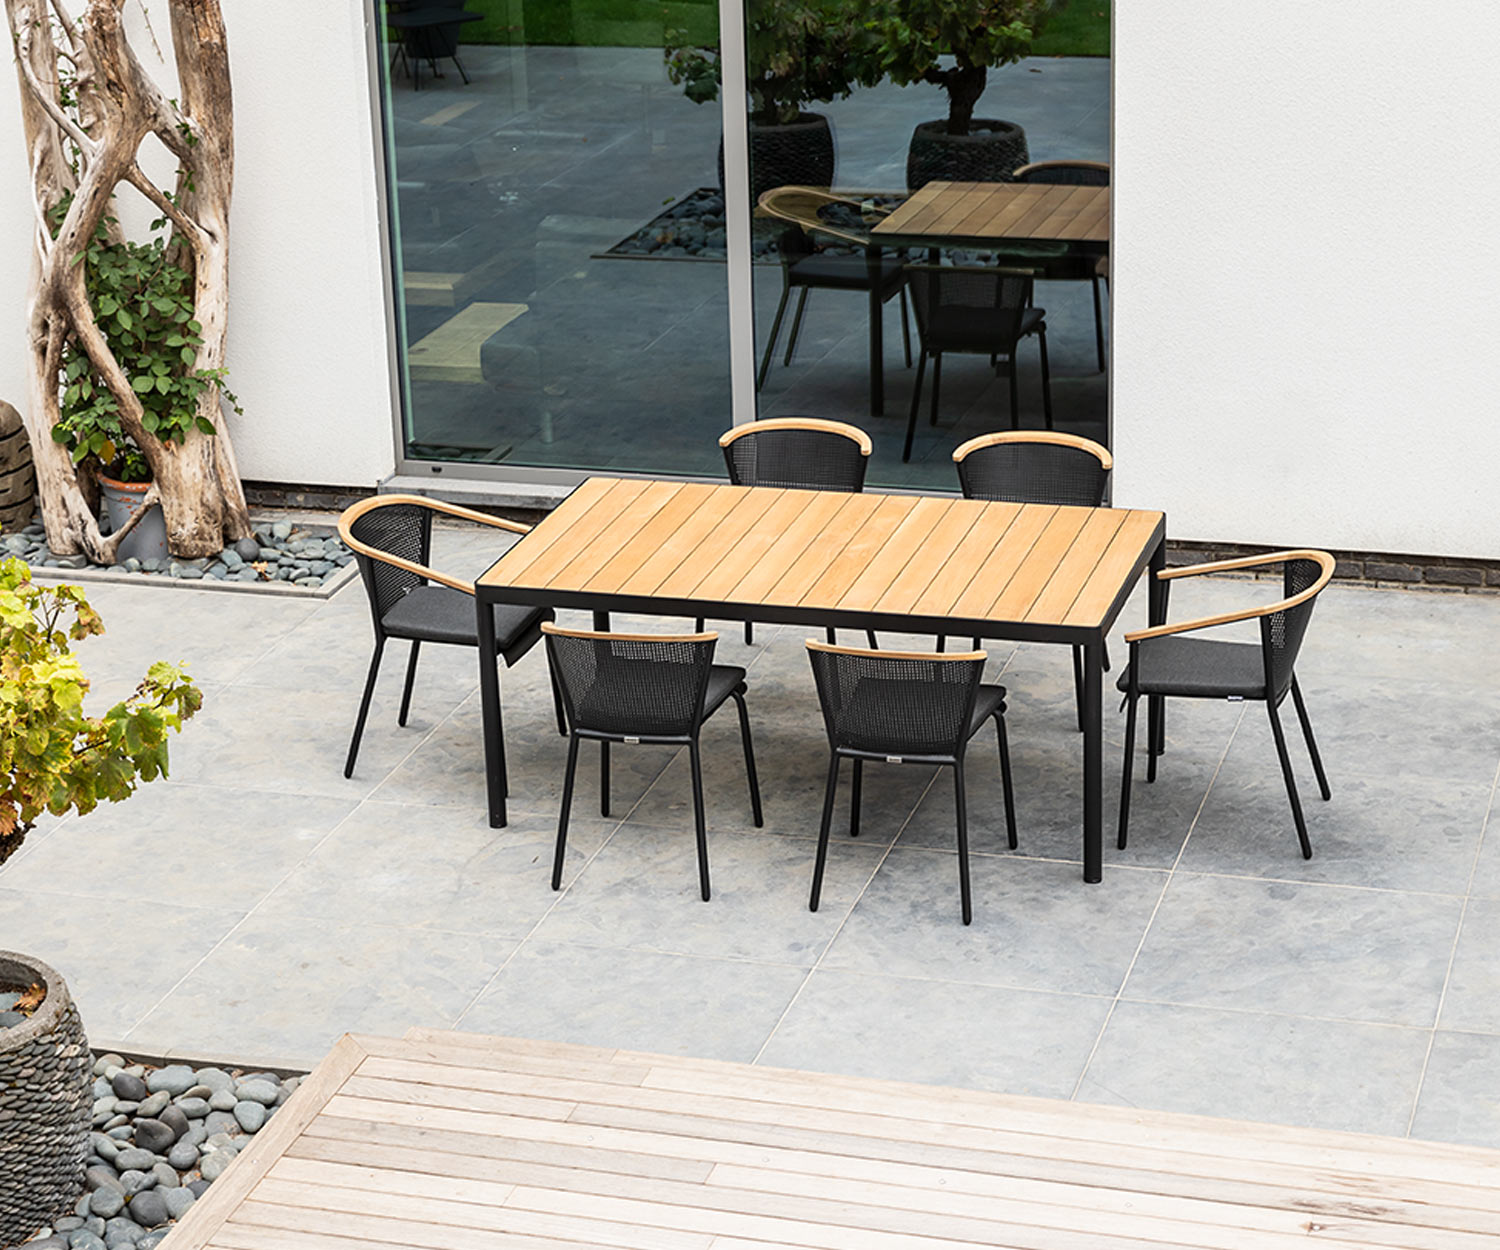 Weatherproof Oasiq Riad design garden chair with aluminium frame on terrace